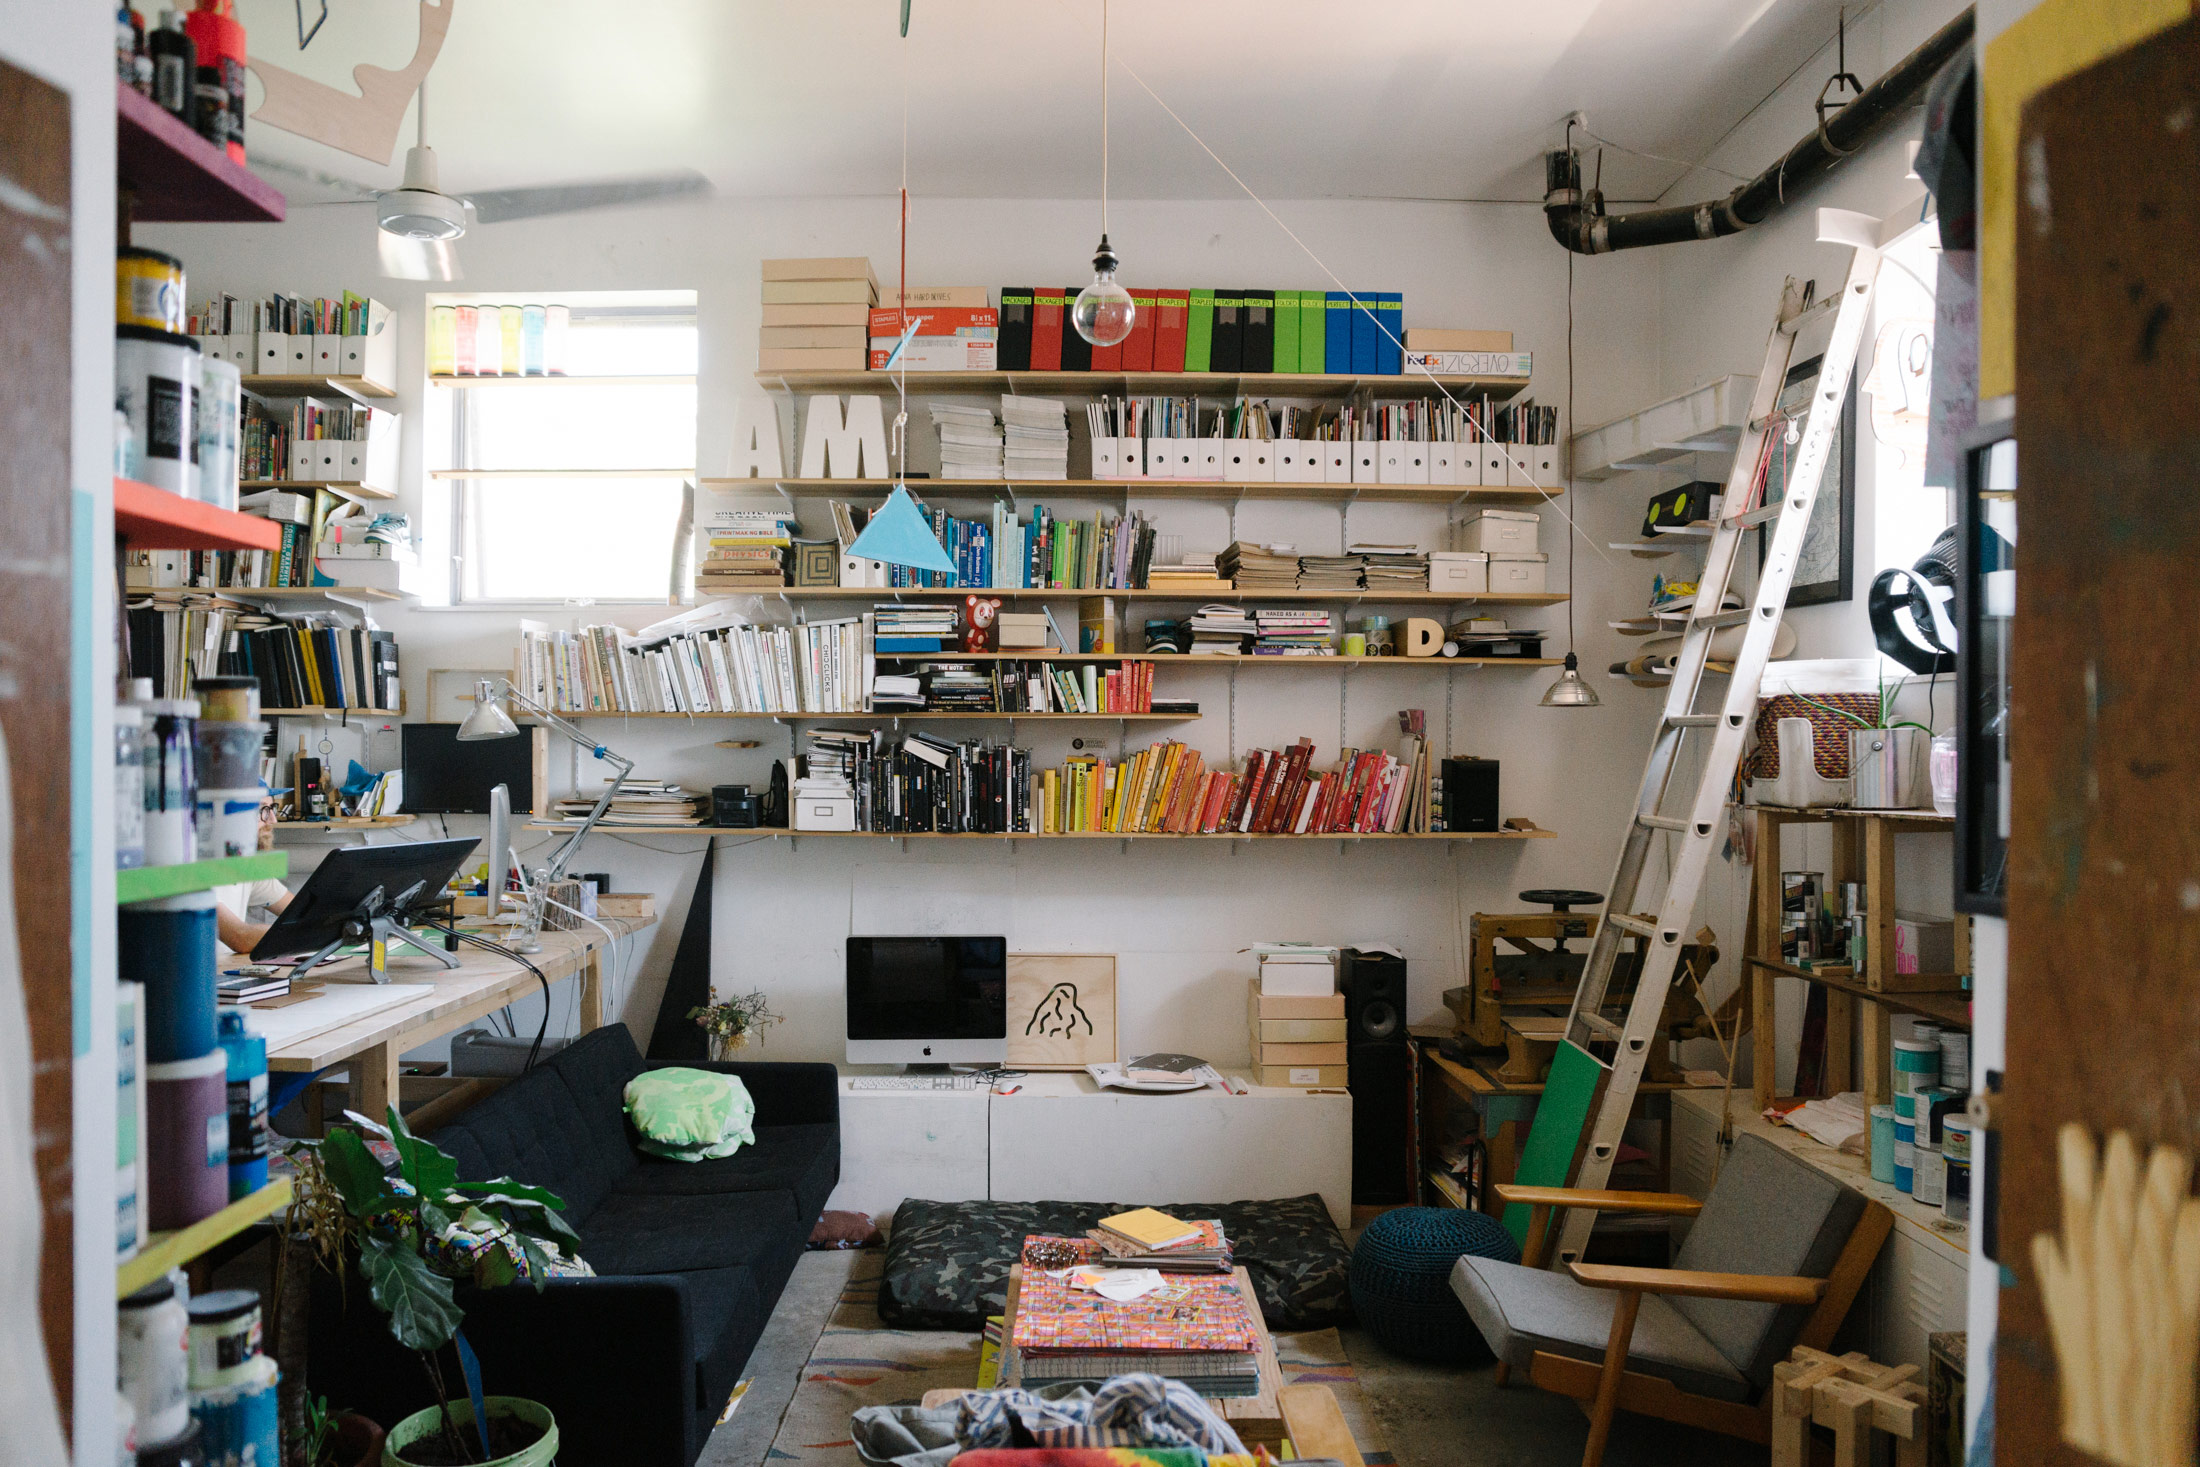 Another peek inside Mike’s studio in Crown Heights, Brooklyn